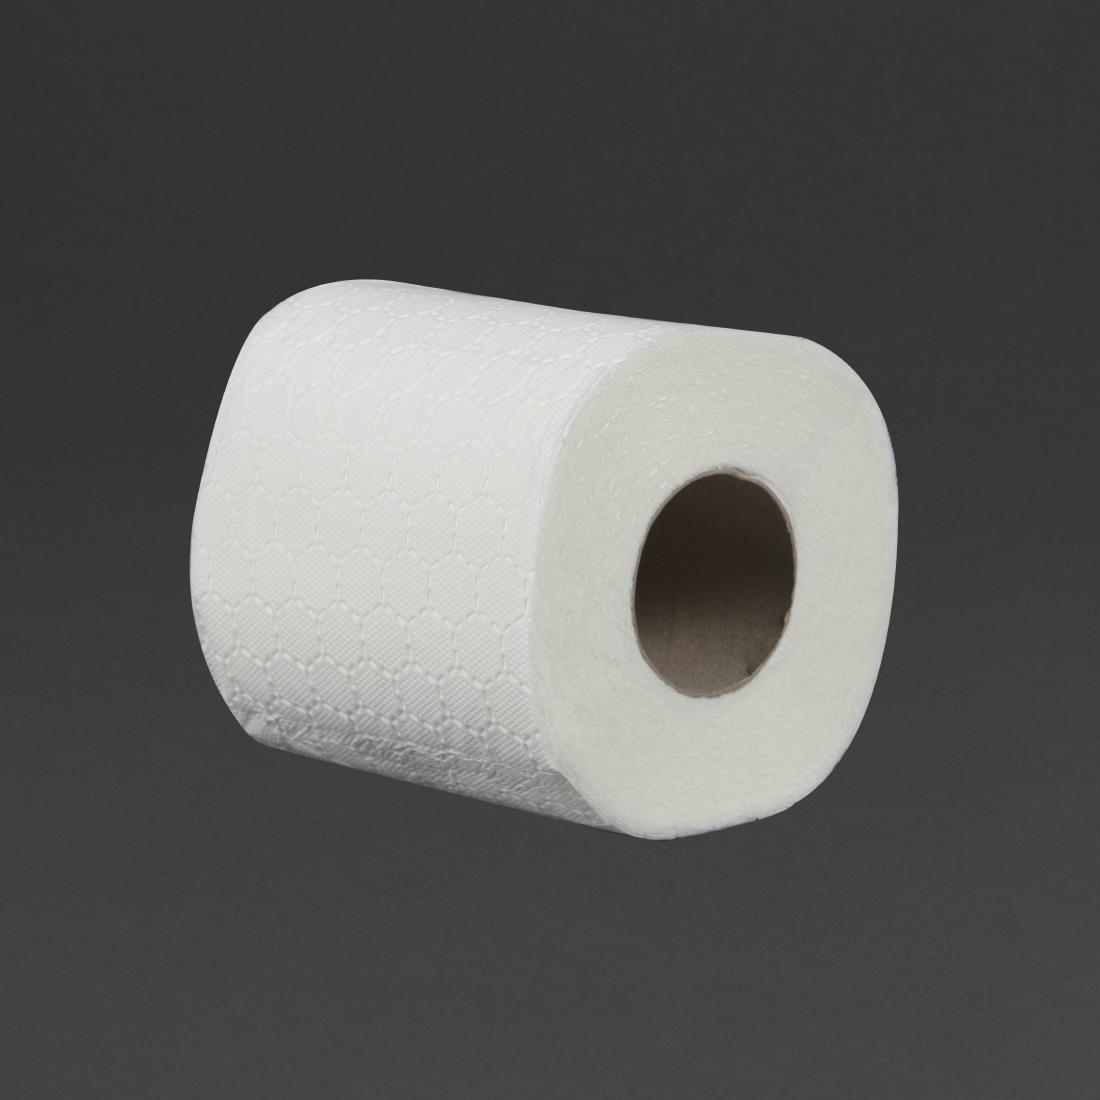 Jantex Premium Toilet Paper 3-Ply (Pack of 40) - GD831  - 1